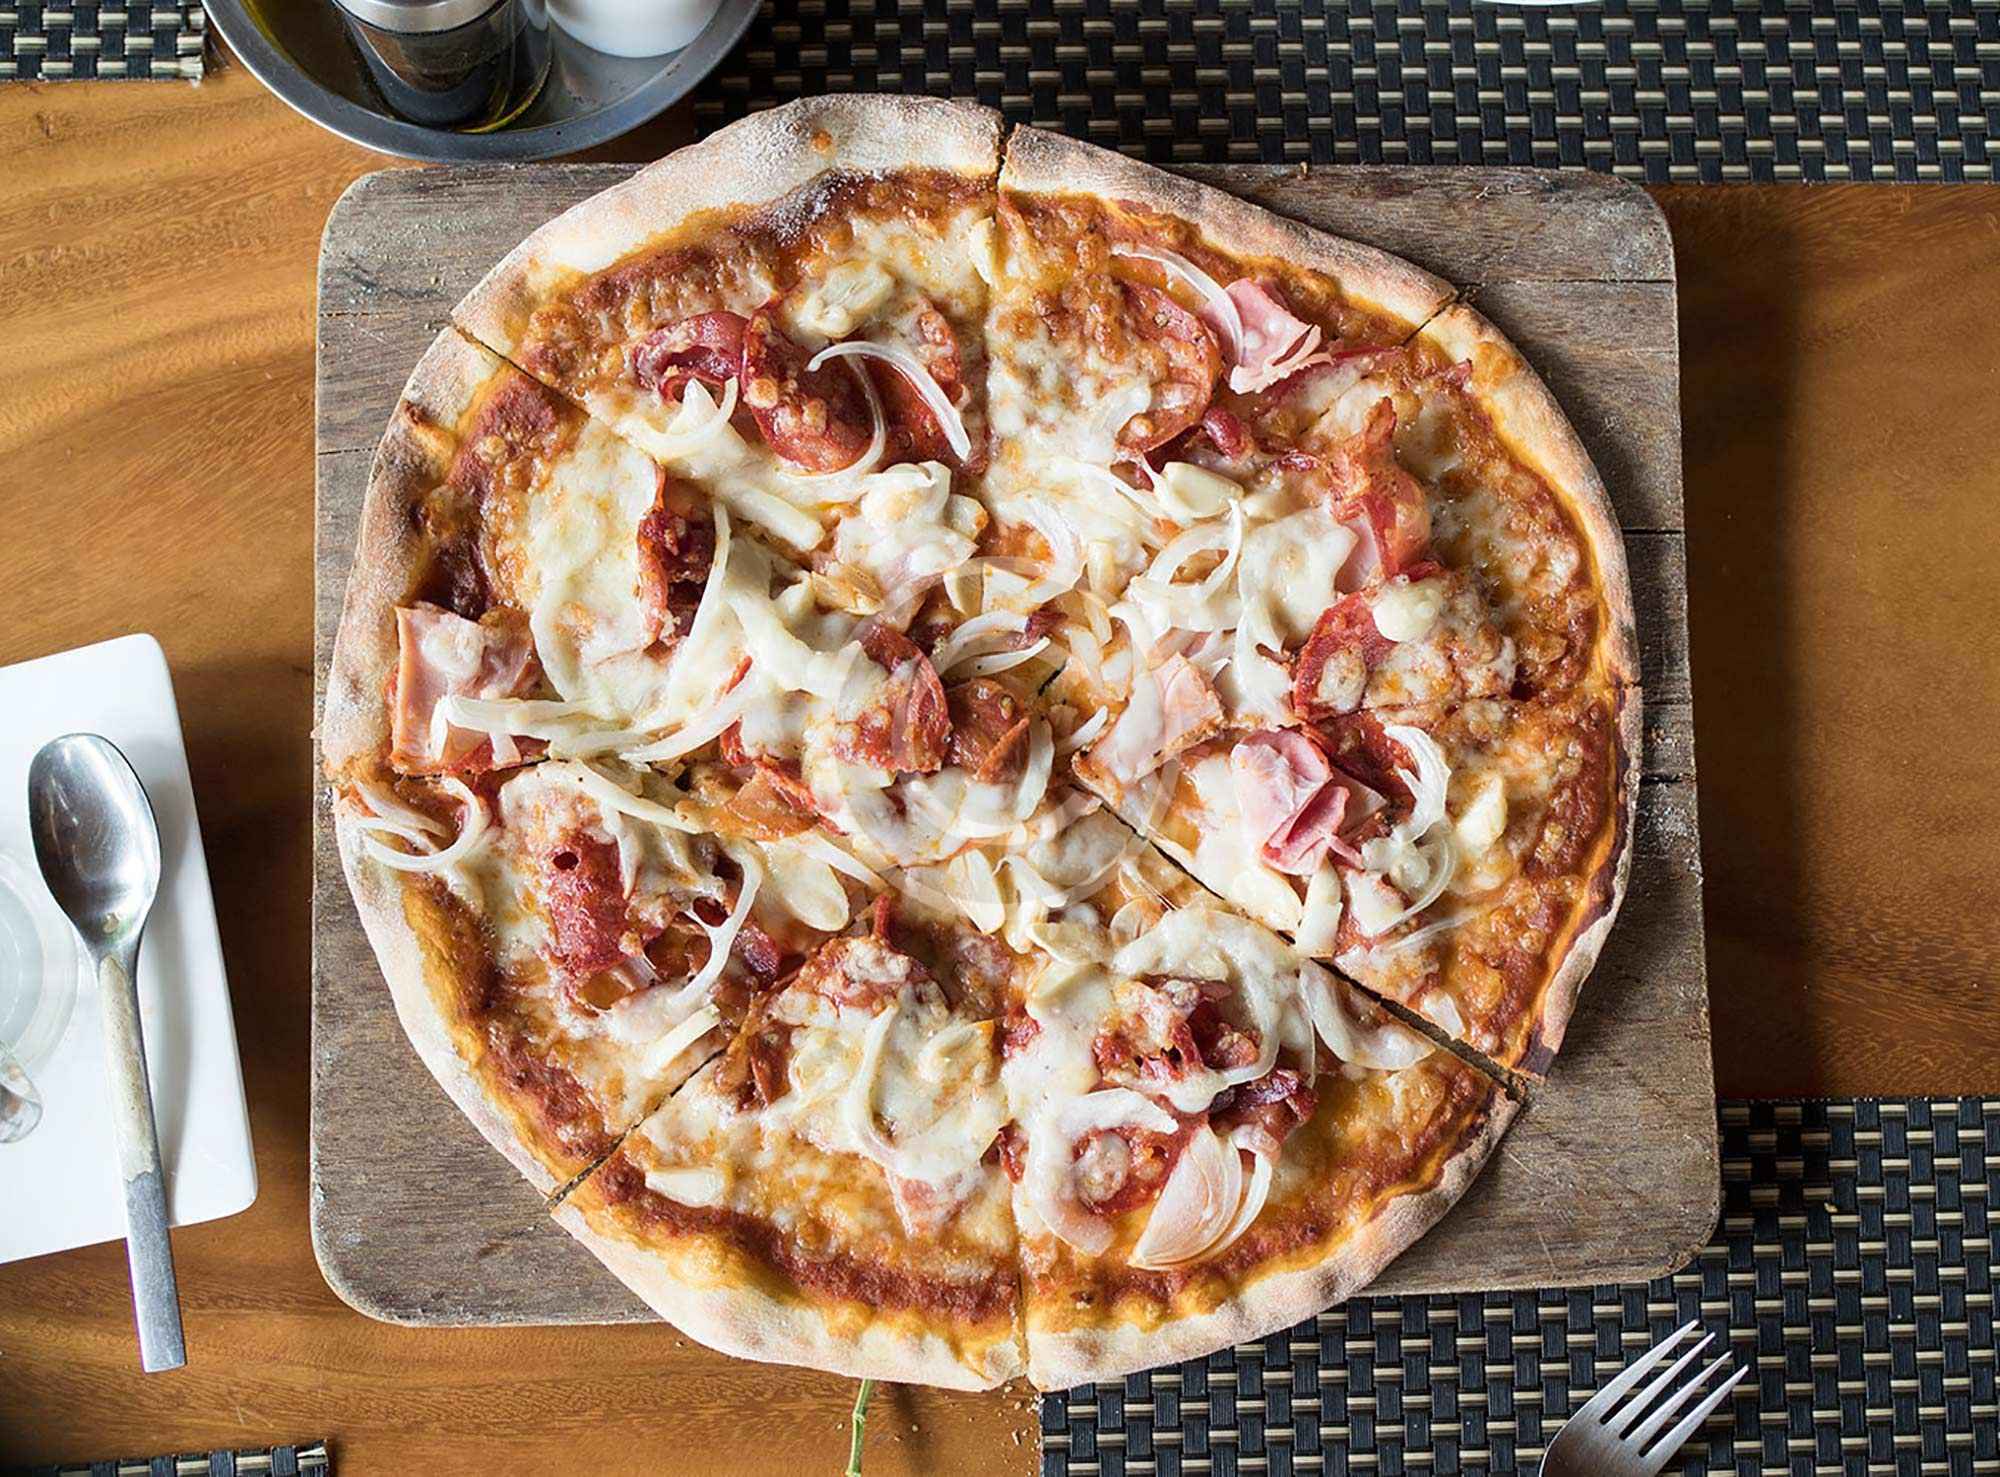 Ontdek ons nieuwe pizzamenu